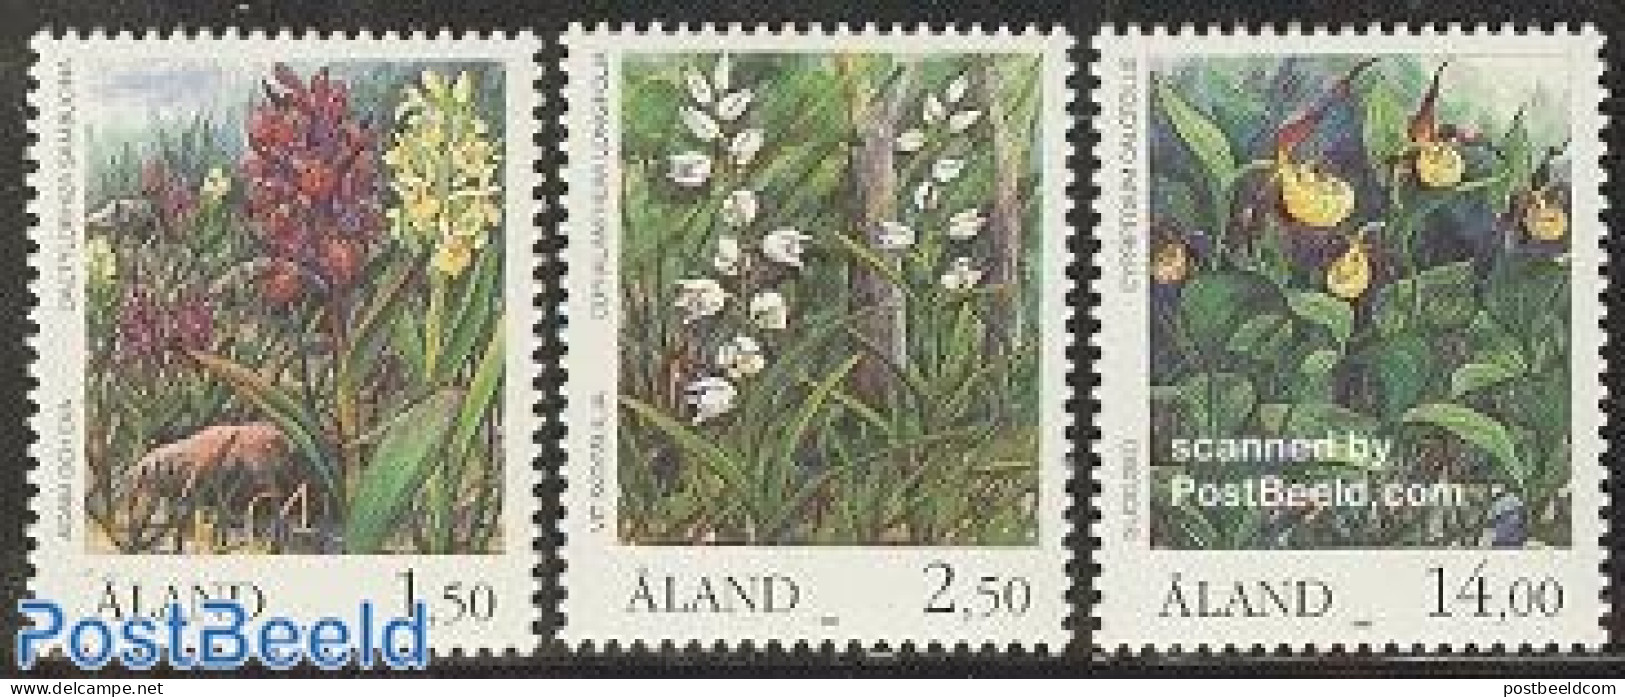 Aland 1989 Orchids 3v, Mint NH, Nature - Flowers & Plants - Orchids - Ålandinseln